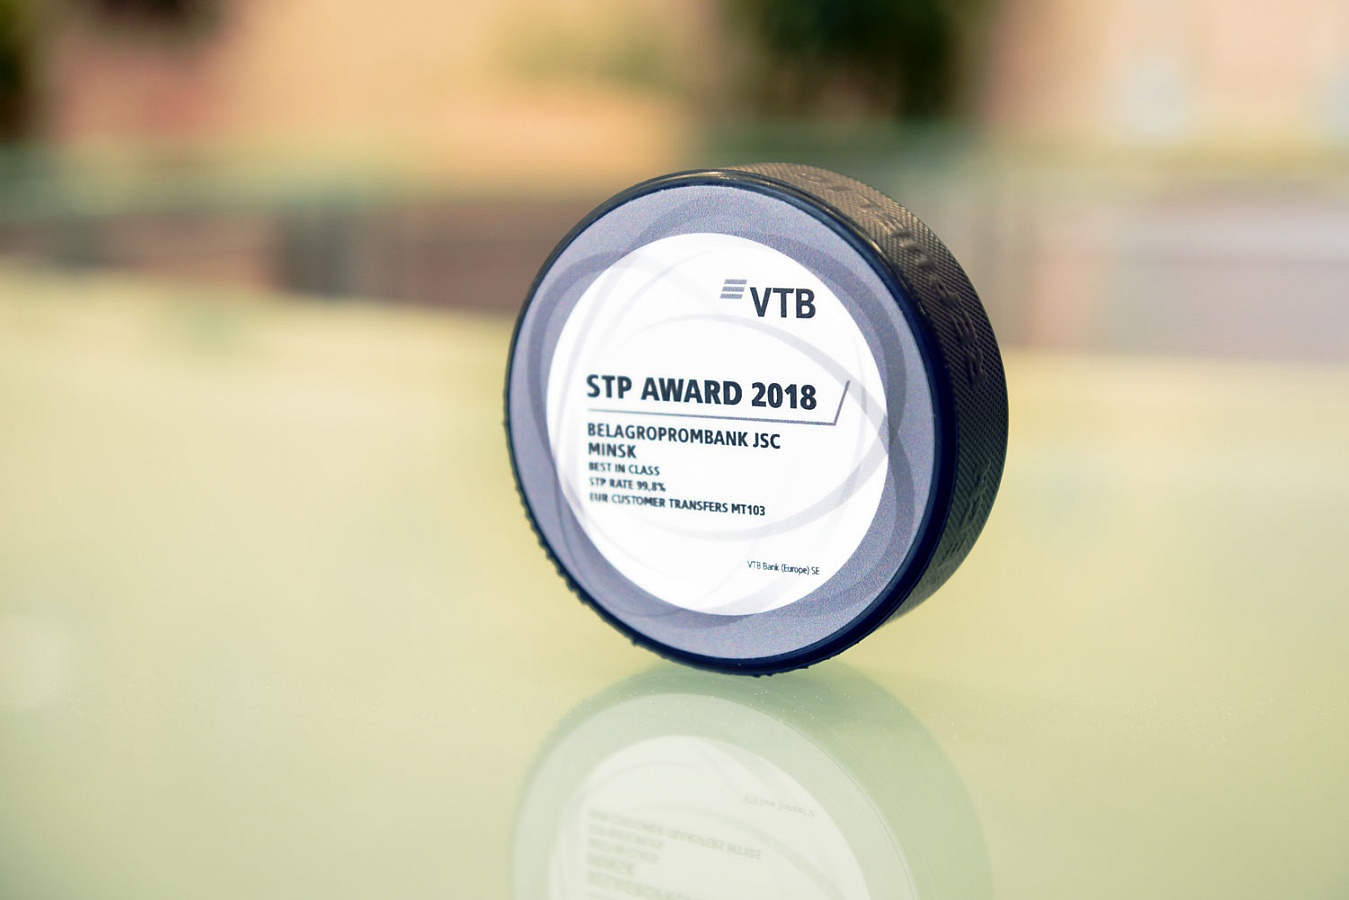 Награда STP AWARD 2018 BEST IN CLASS от немецкого банка VTB Bank (Europe) SE